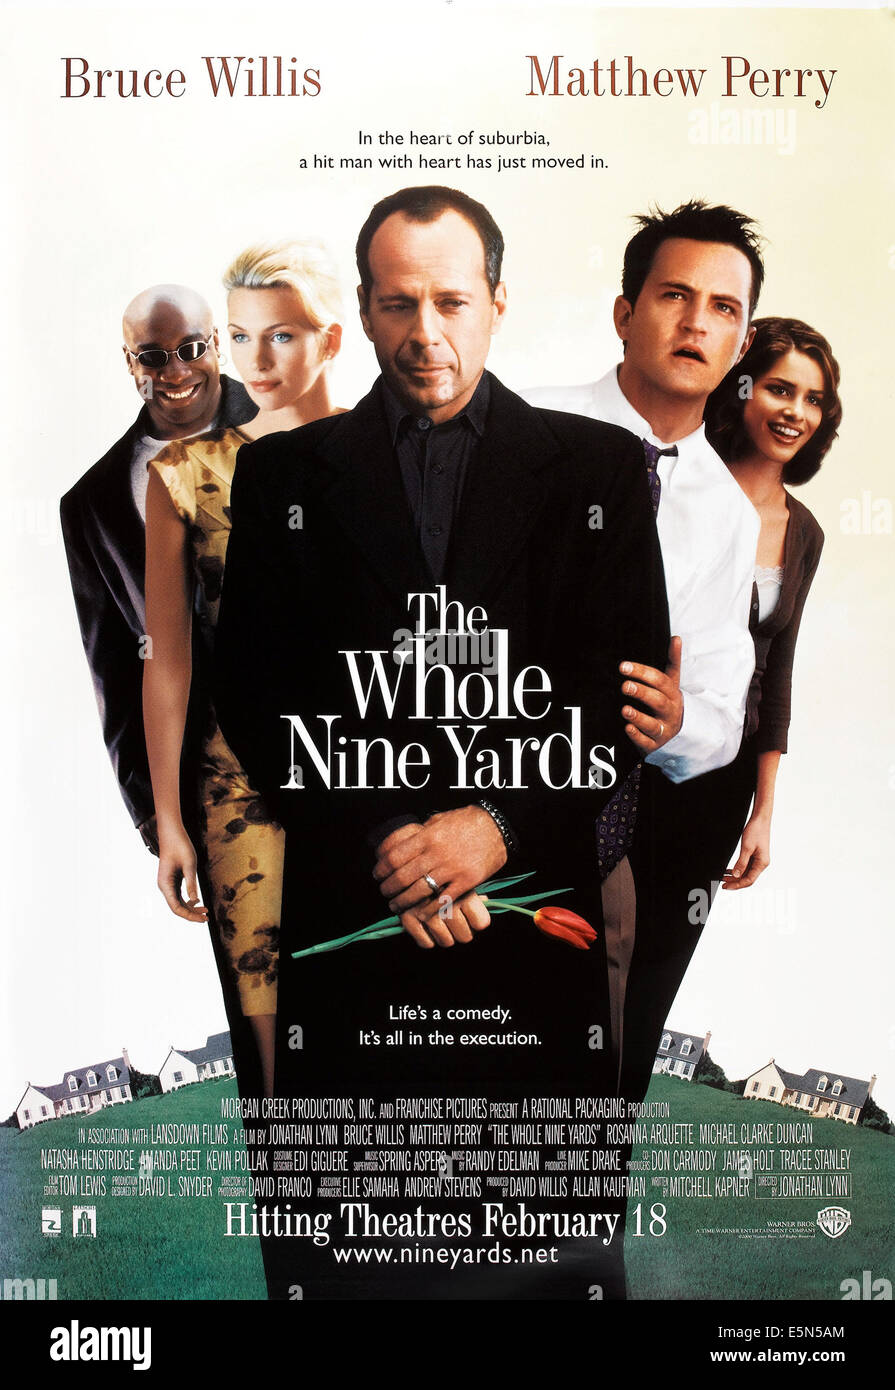 THE WHOLE NINE YARDS, US advance poster art, from left: Michael Clarke Duncan, Natasha Henstridge, Bruce Willis, Matthew Perry, Stock Photo